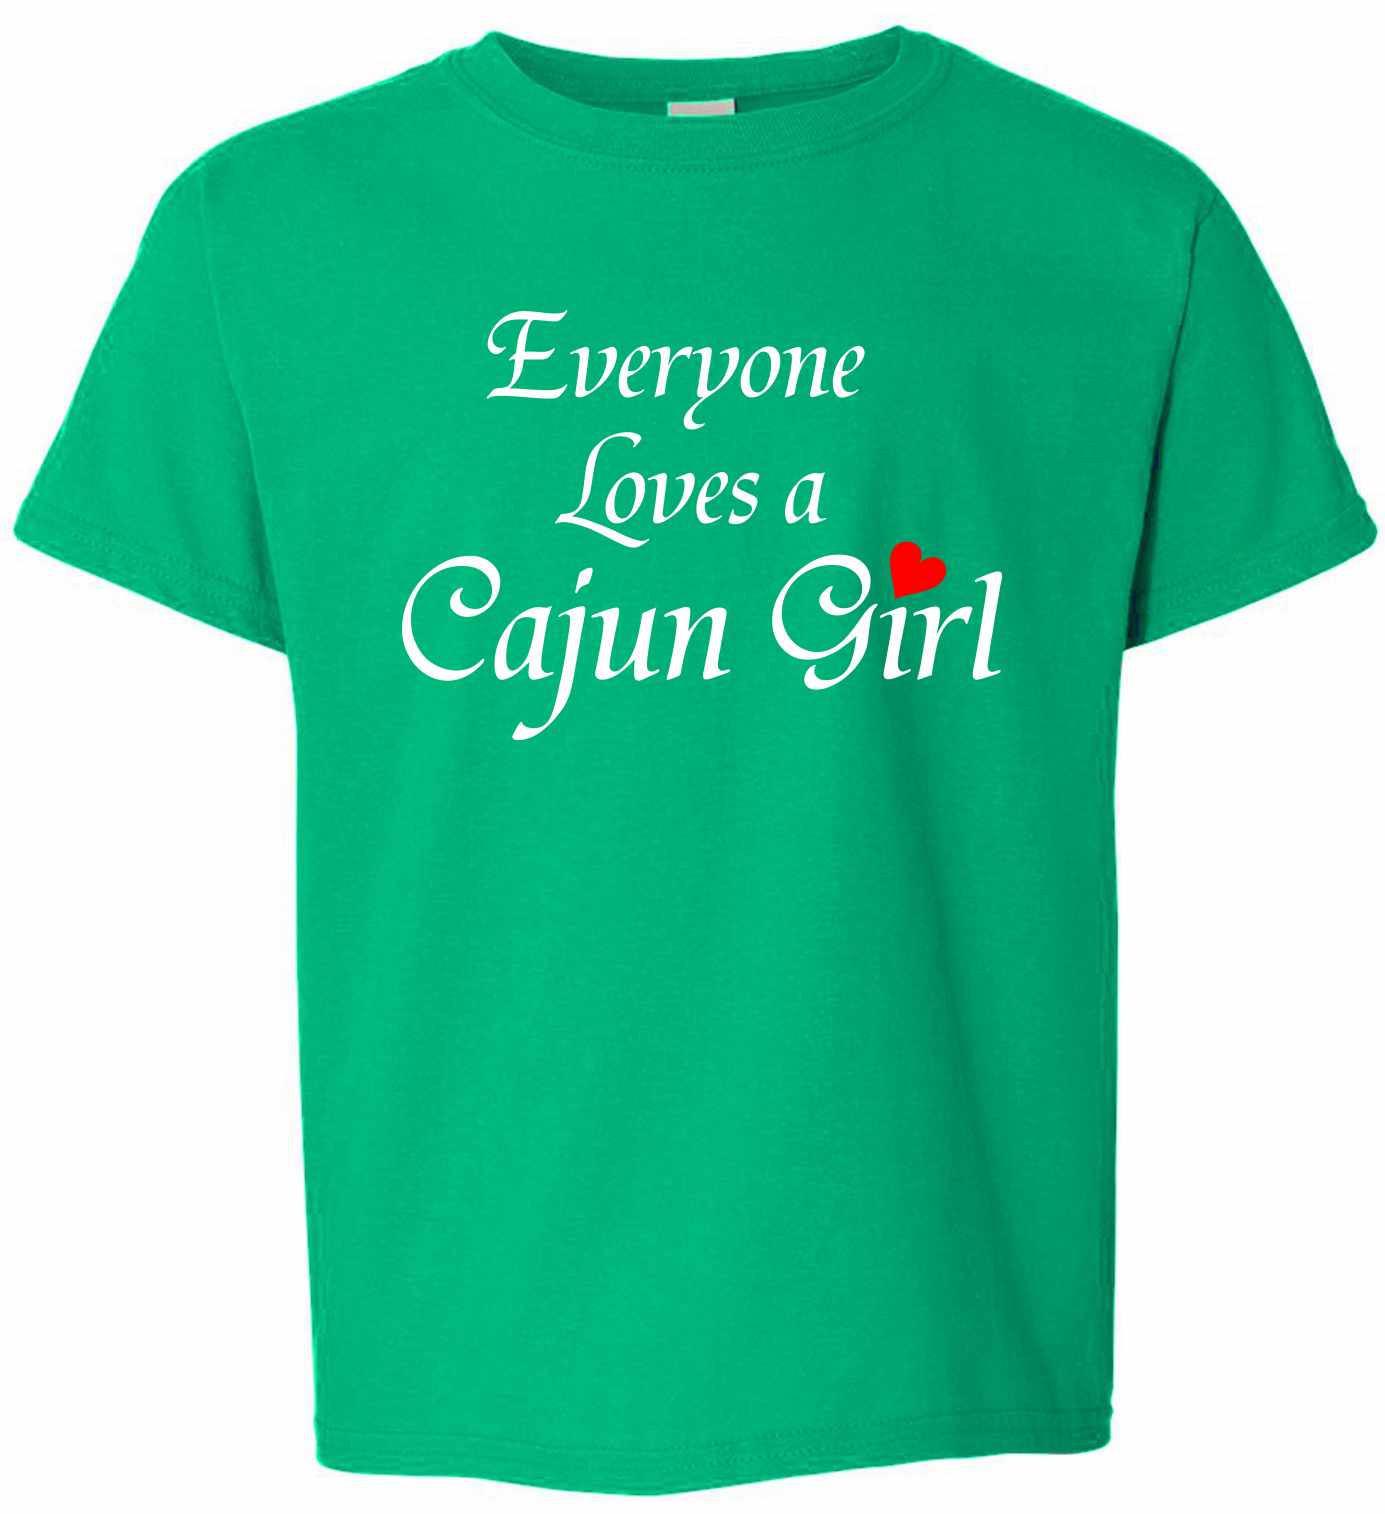 Everyone Loves A Cajun Girl on Kids T-Shirt (#544-201)